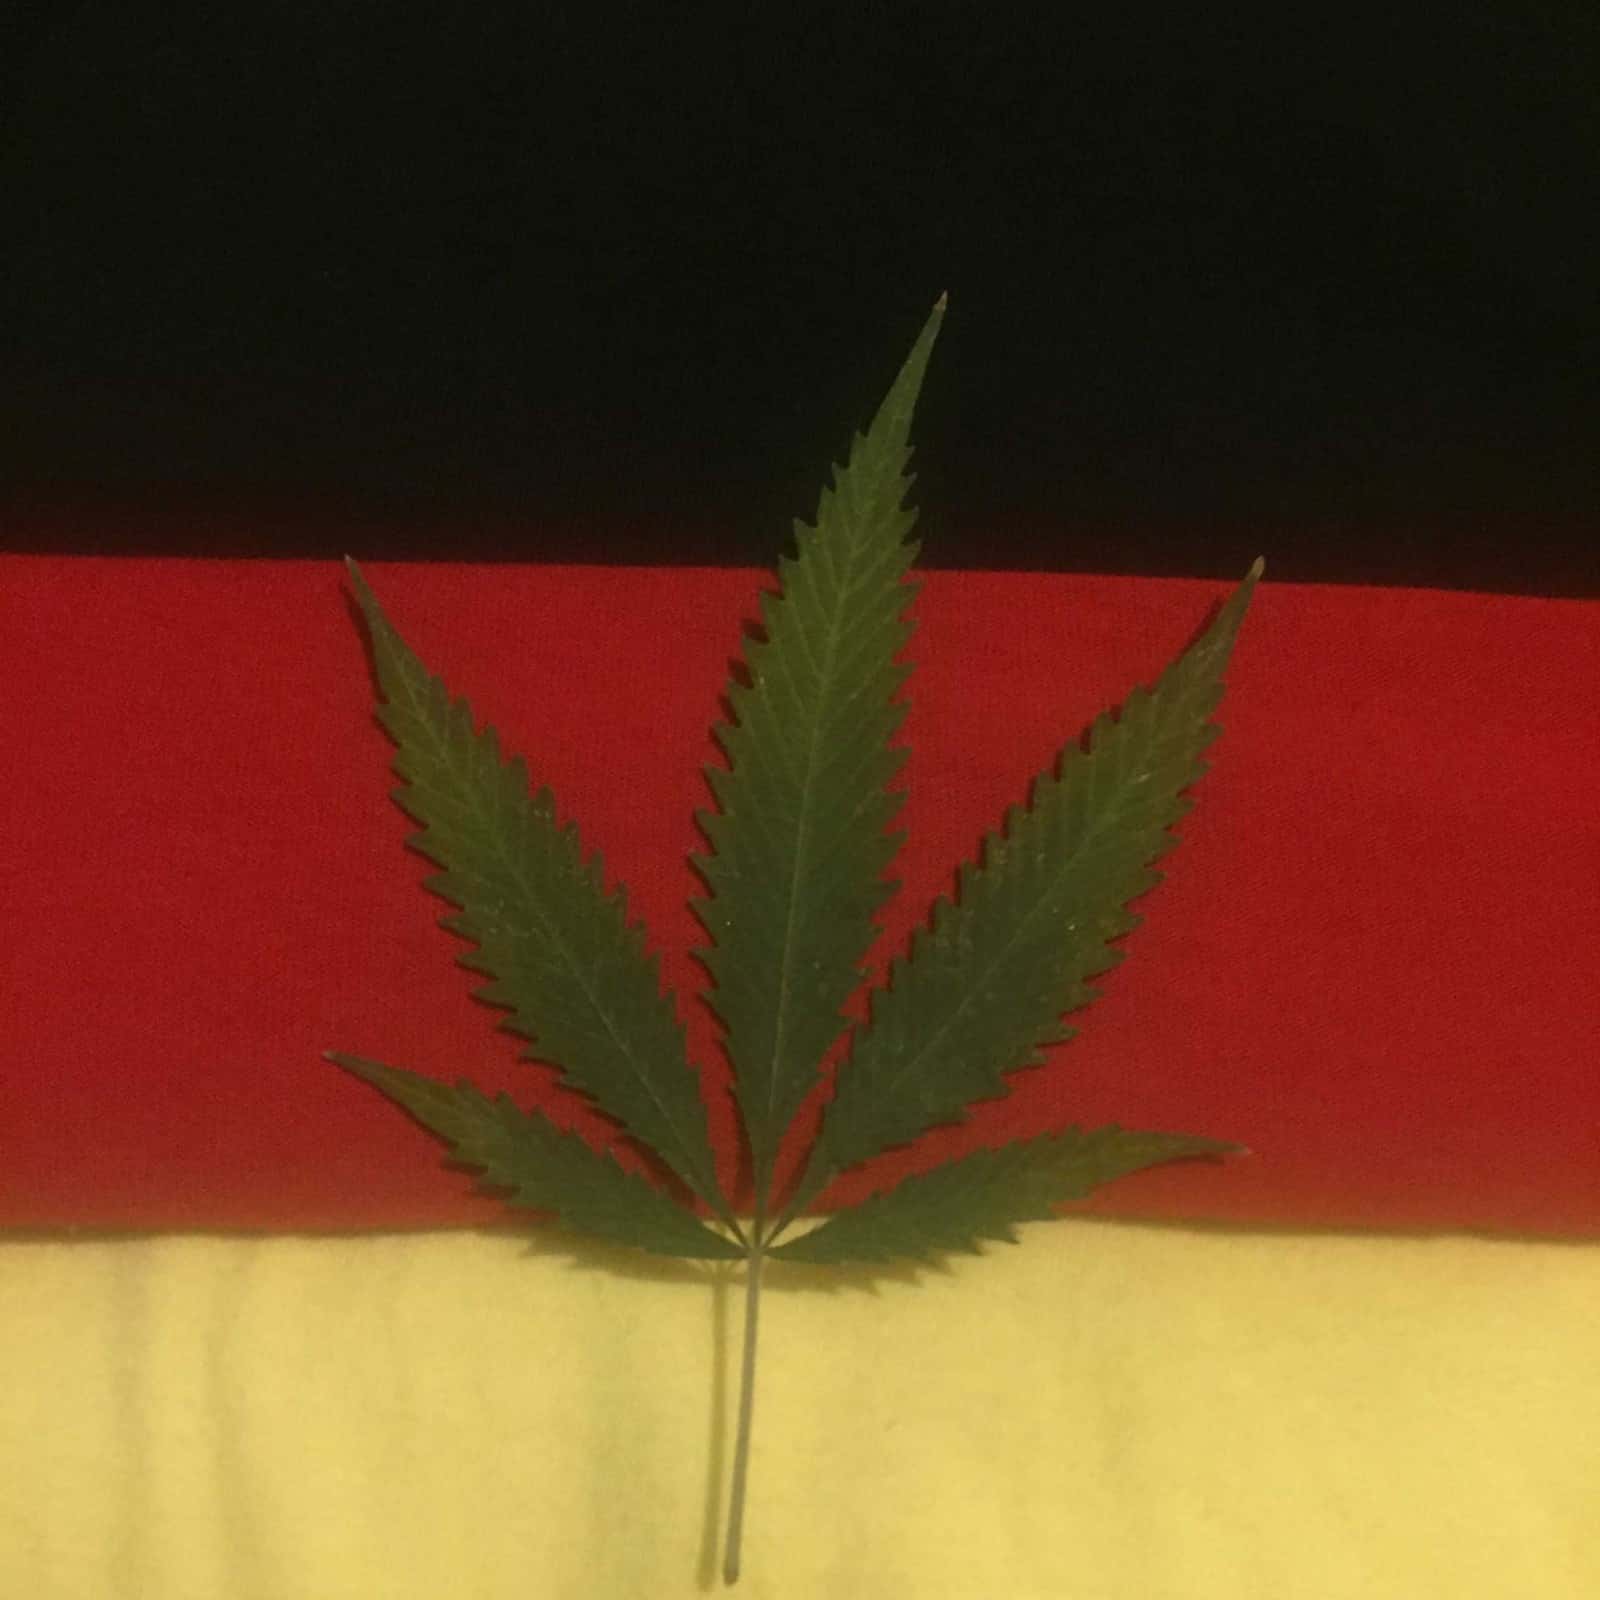 Germany Announces Plans To Legalize Medical Marijuana